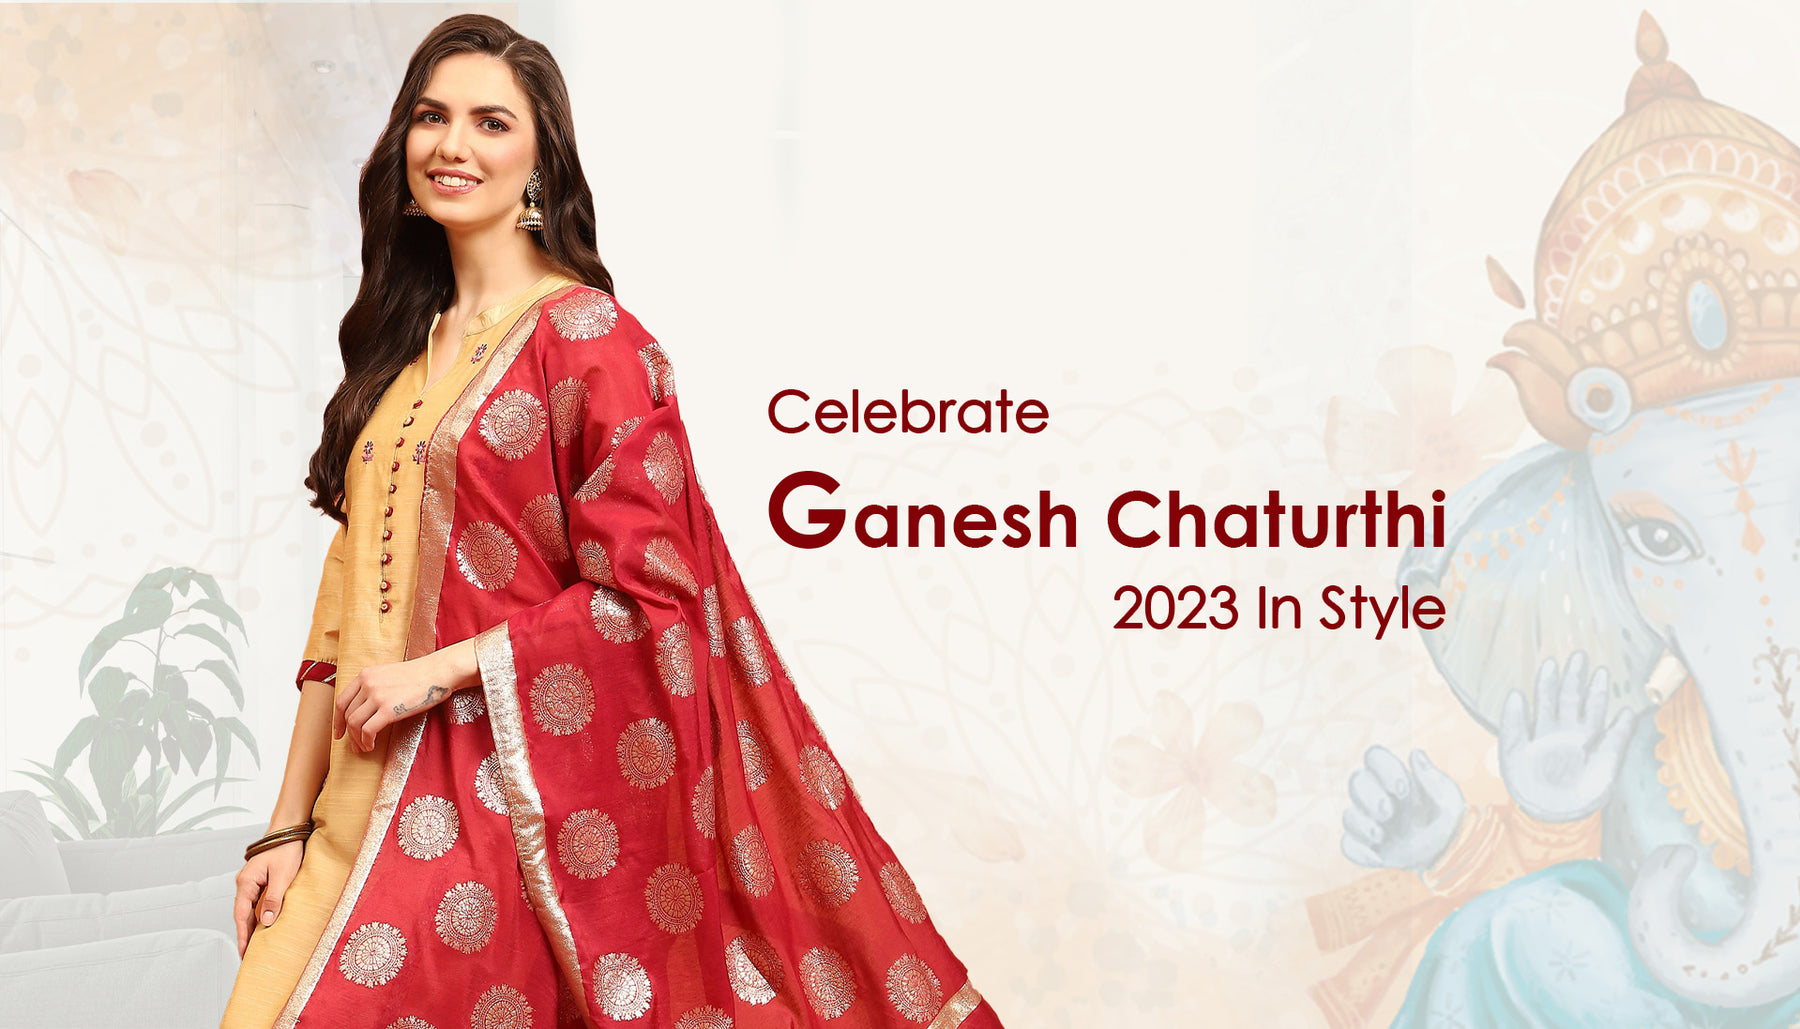 Celebrate Ganesh Chaturthi 2023 In Style